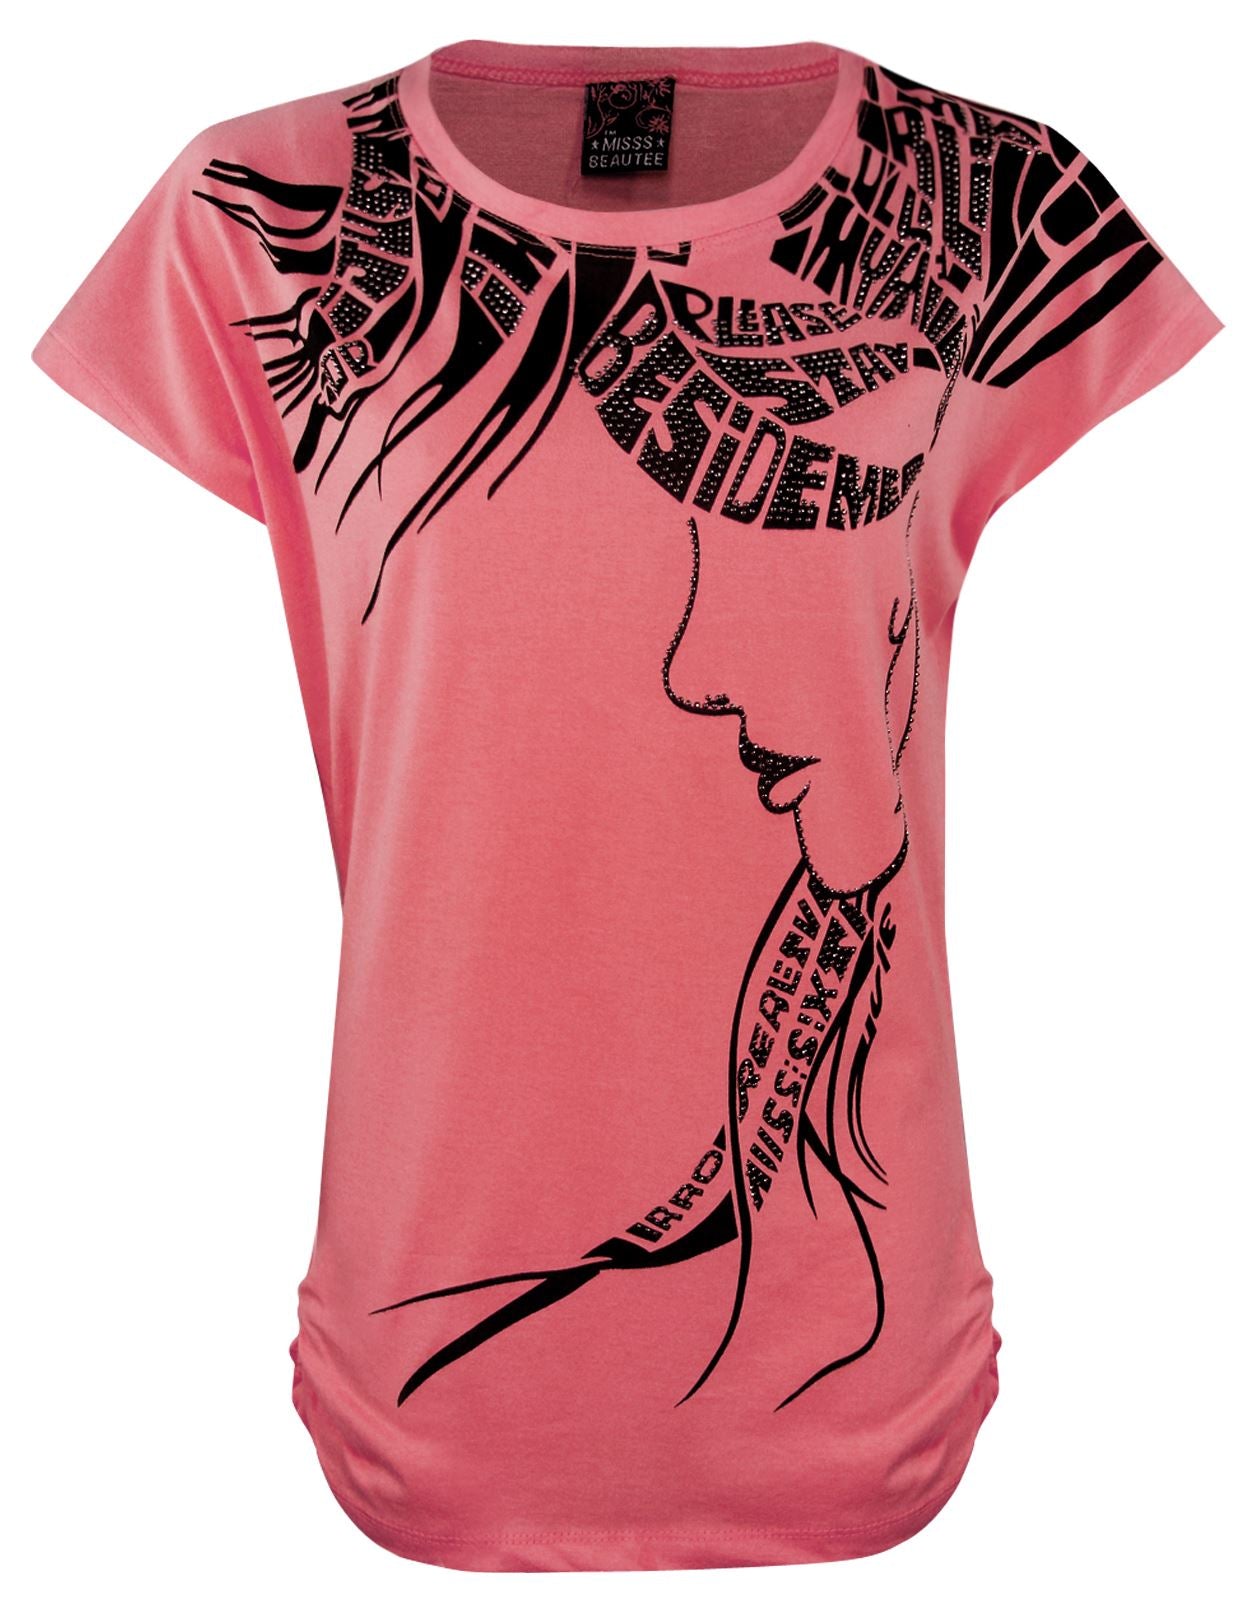 Pink 1 / One Size: Regular (8-14) Ladies Girls Cap Sleeve Printed T-Shirt The Orange Tags